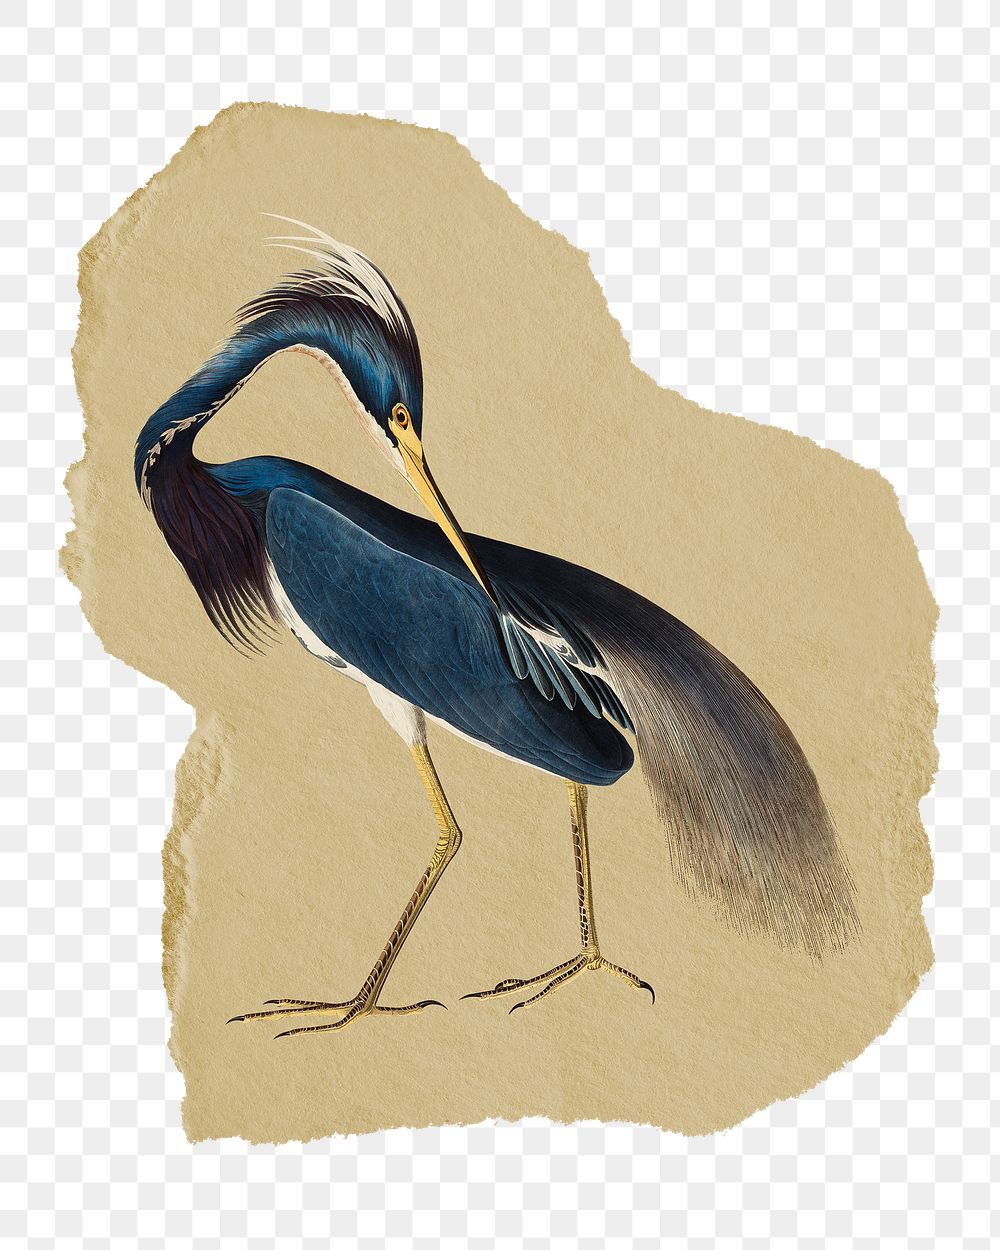 Png Louisiana Heron sticker, blue bird vintage illustration on ripped paper, transparent background